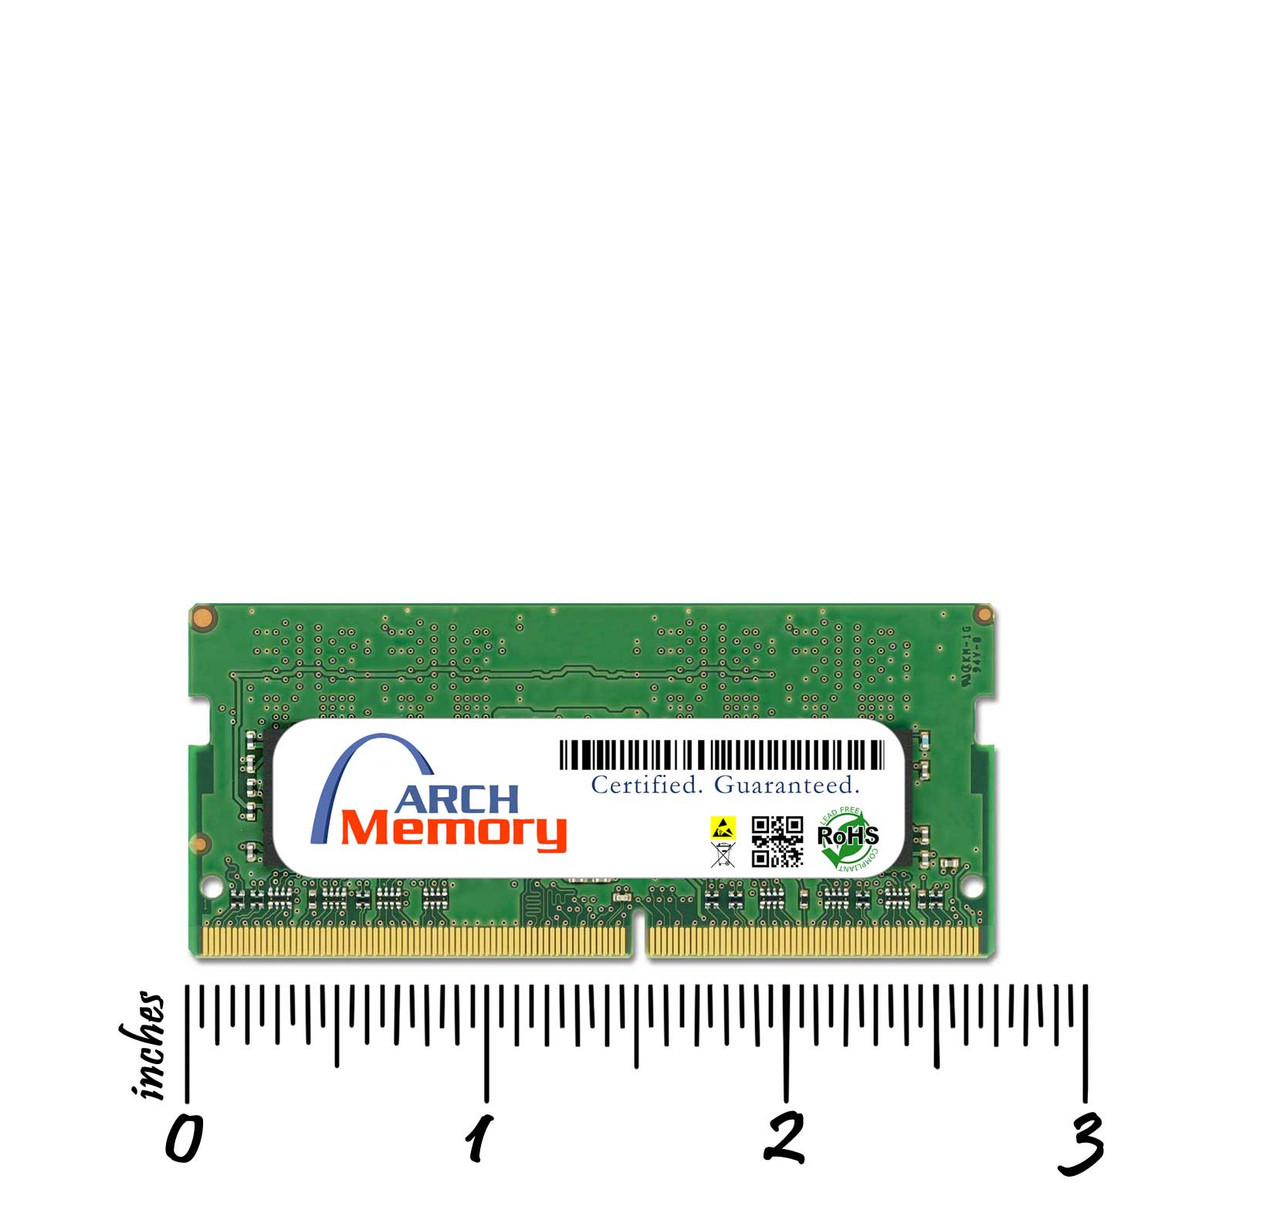 8GB Memory Dell Inspiron 13R 5379 DDR4 RAM Upgrade Upgrade* D8GB2400SOr1b8-MG005